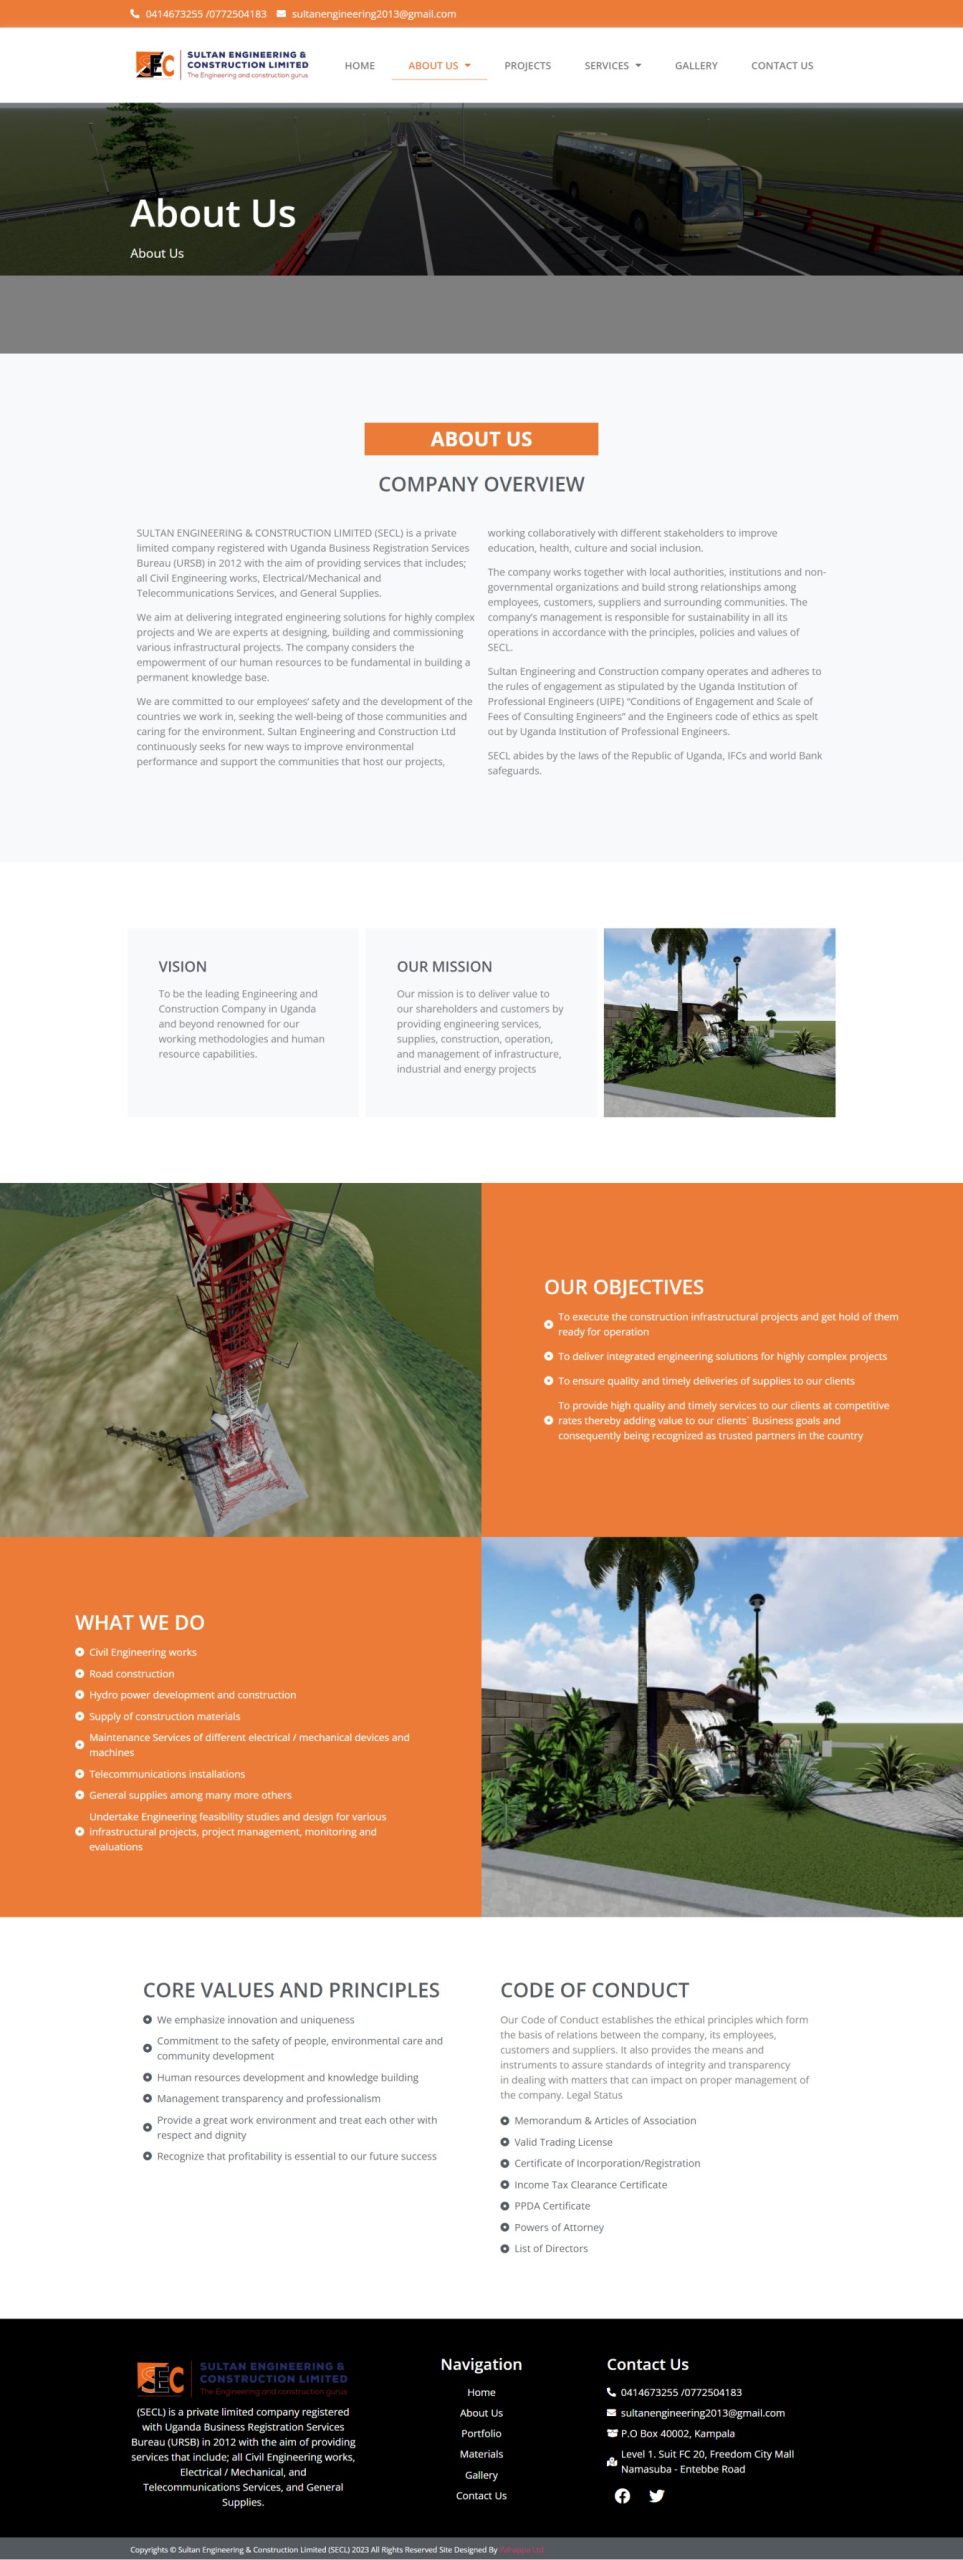 Website-design-sultan-3